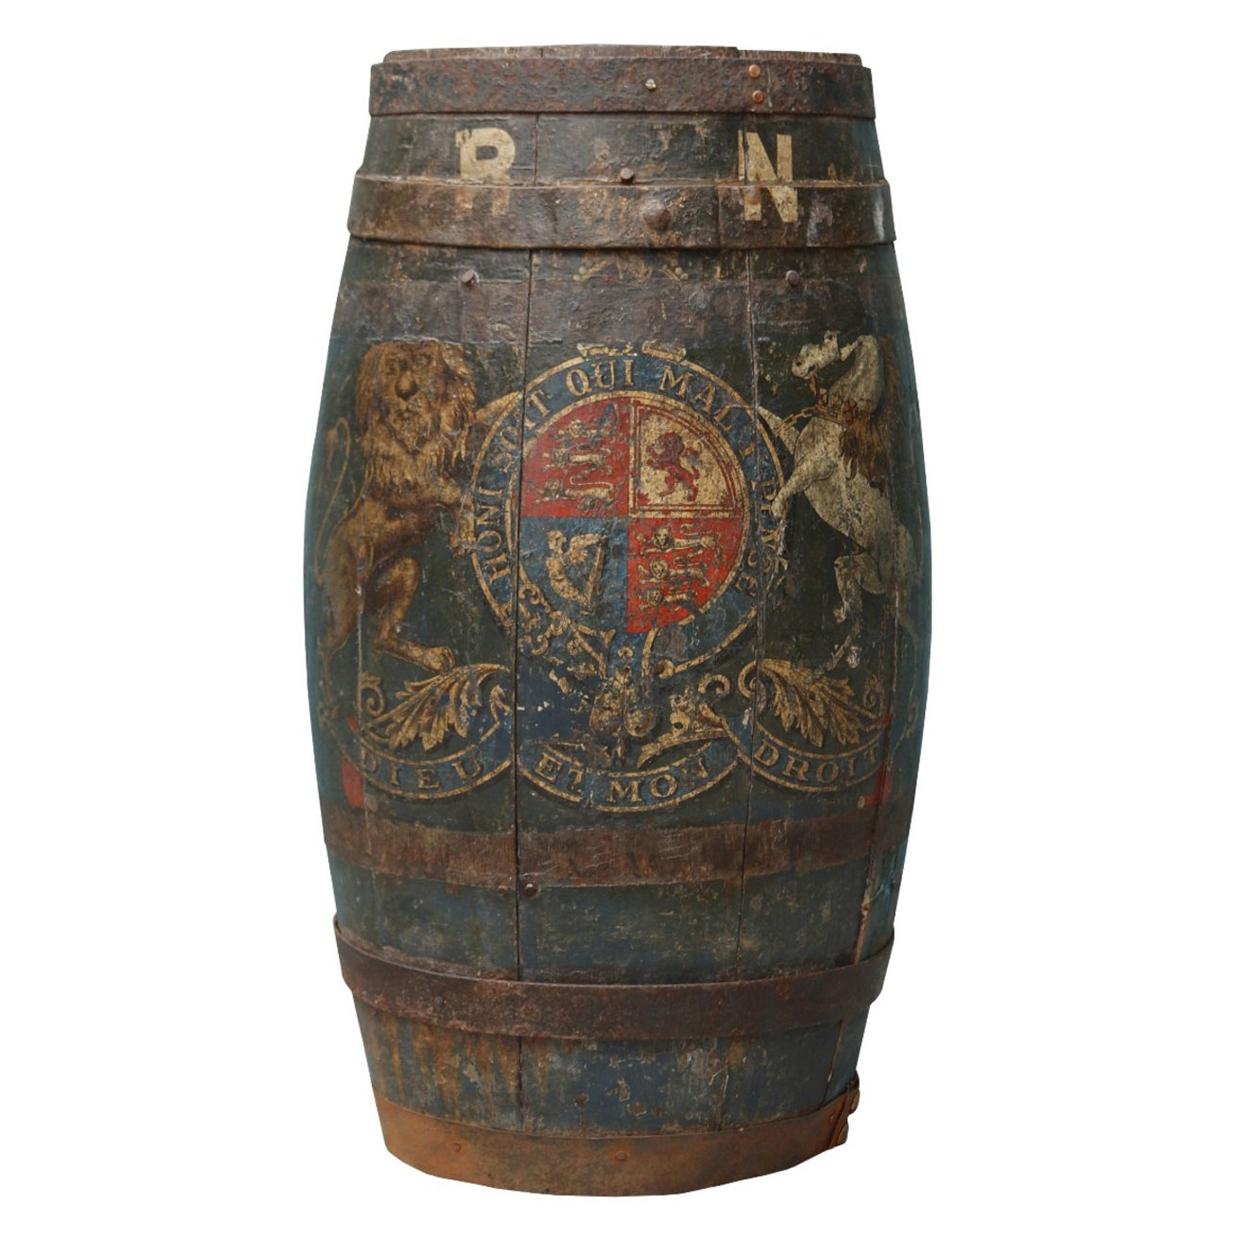 Antique Royal Navy Coopered Rum Barrel Umbrella Stand